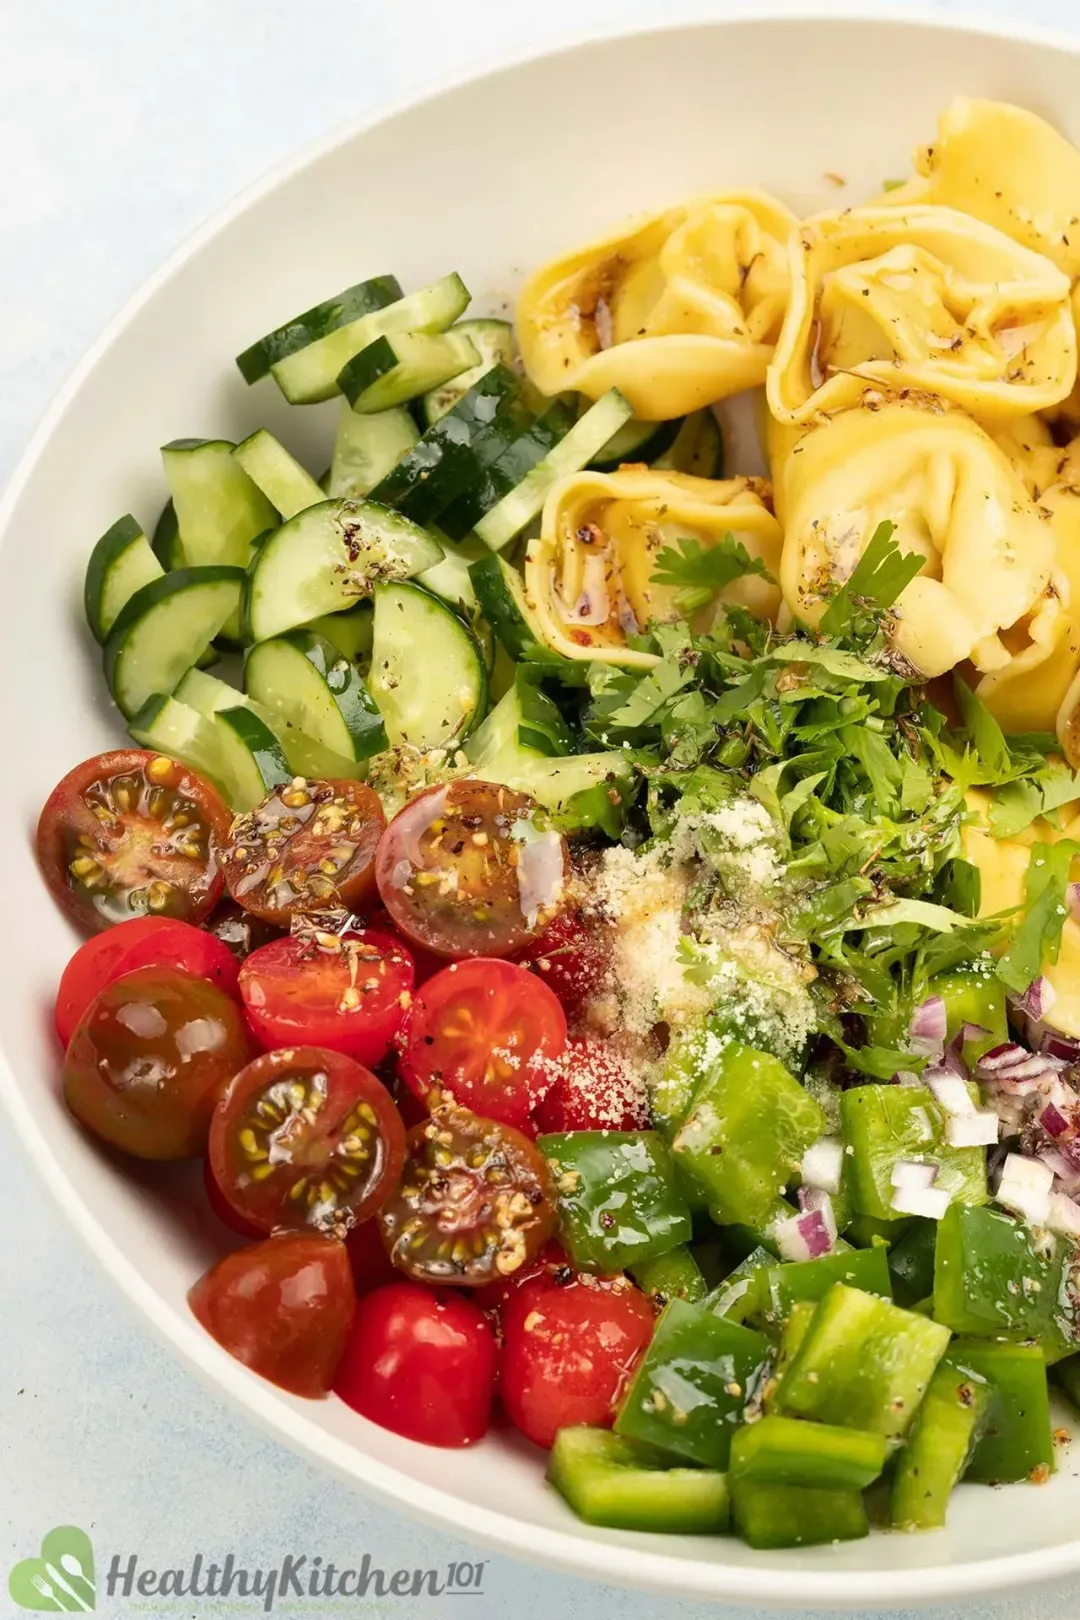 Is This Tortellini Salad Recipe Healthy